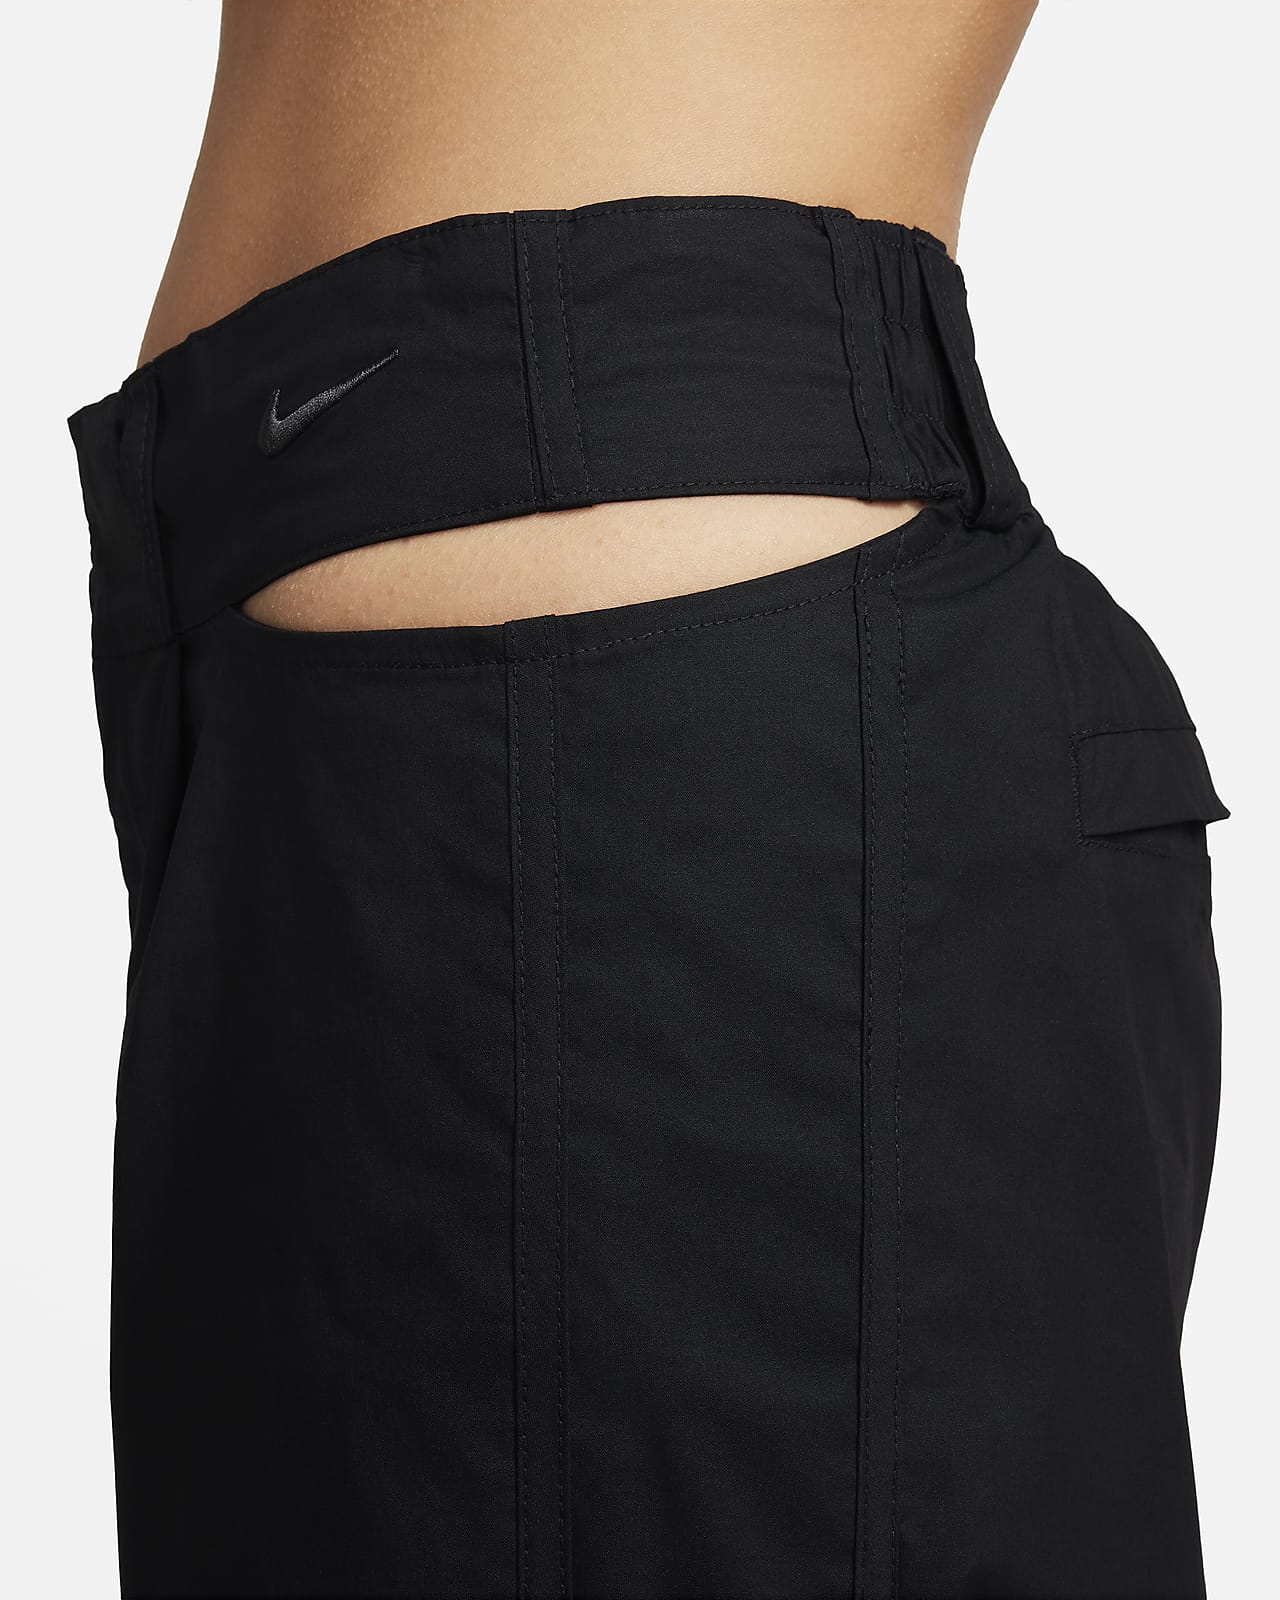 Nike AS Nike Sportswear Pant WVN 'Black' - CJ7347-010